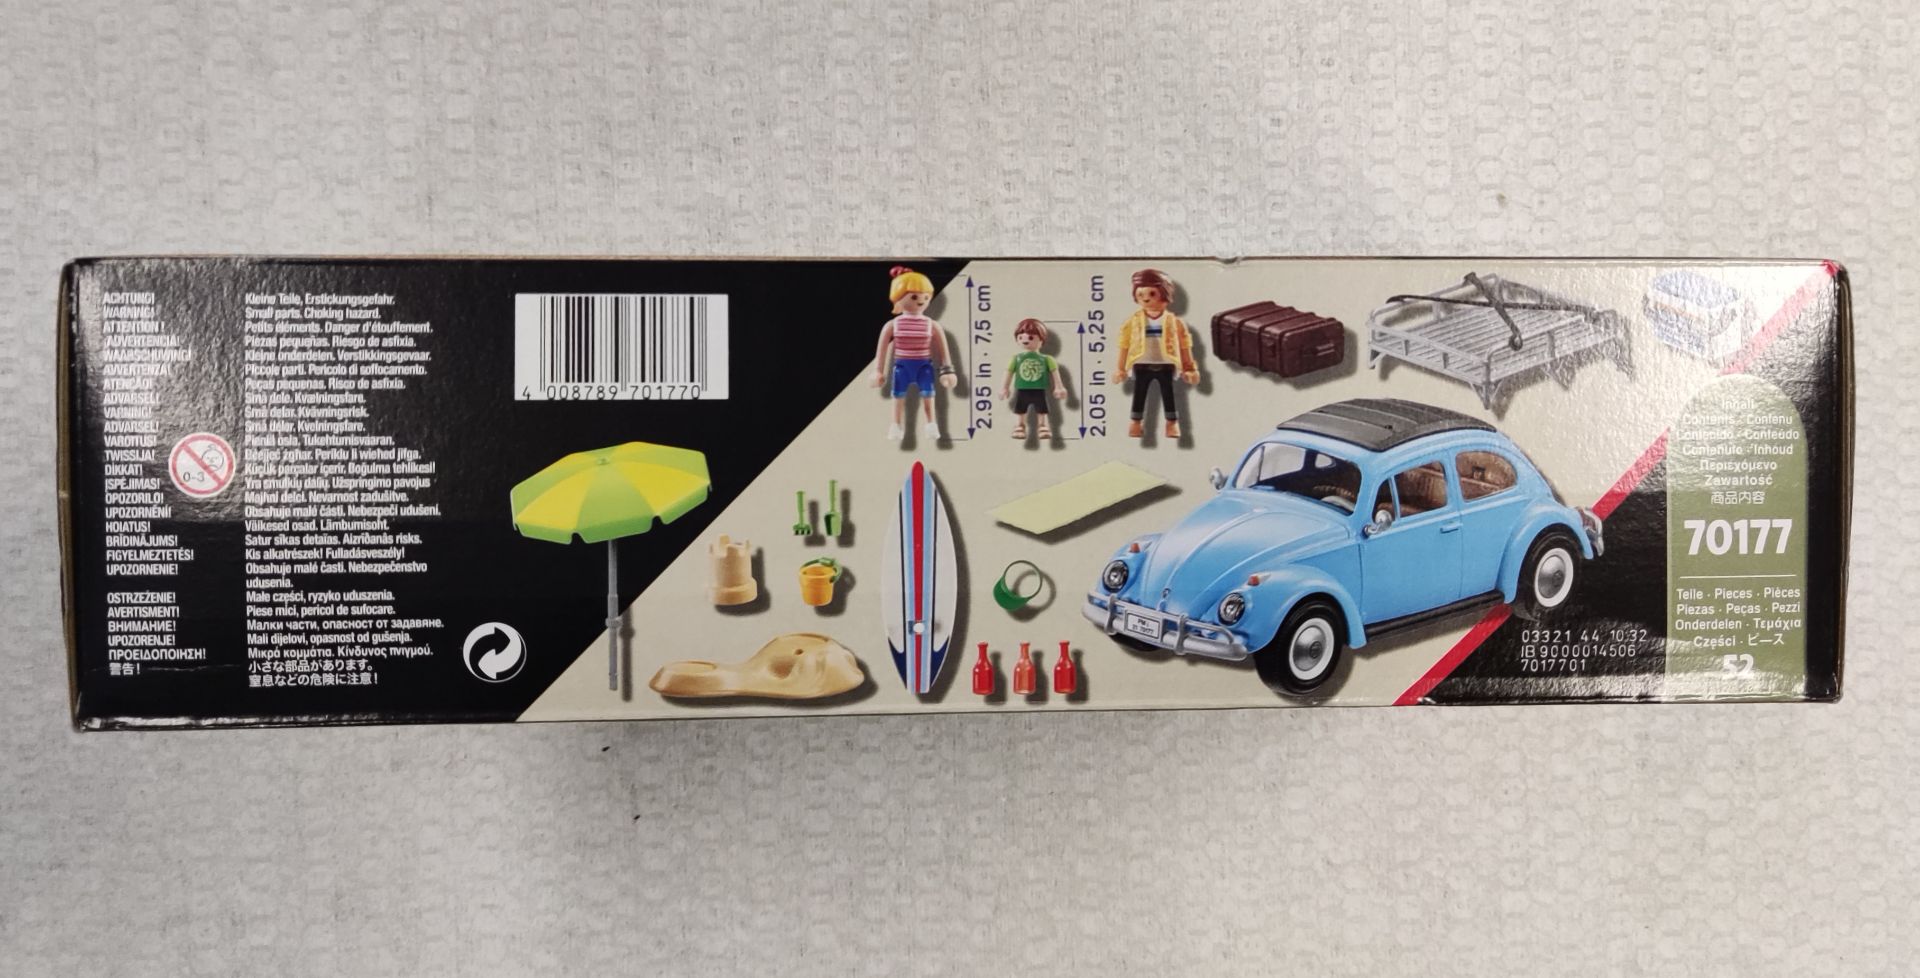 1 x Playmobil Volkswagen Beetle - Model 70177 - New/Boxed - Image 5 of 6